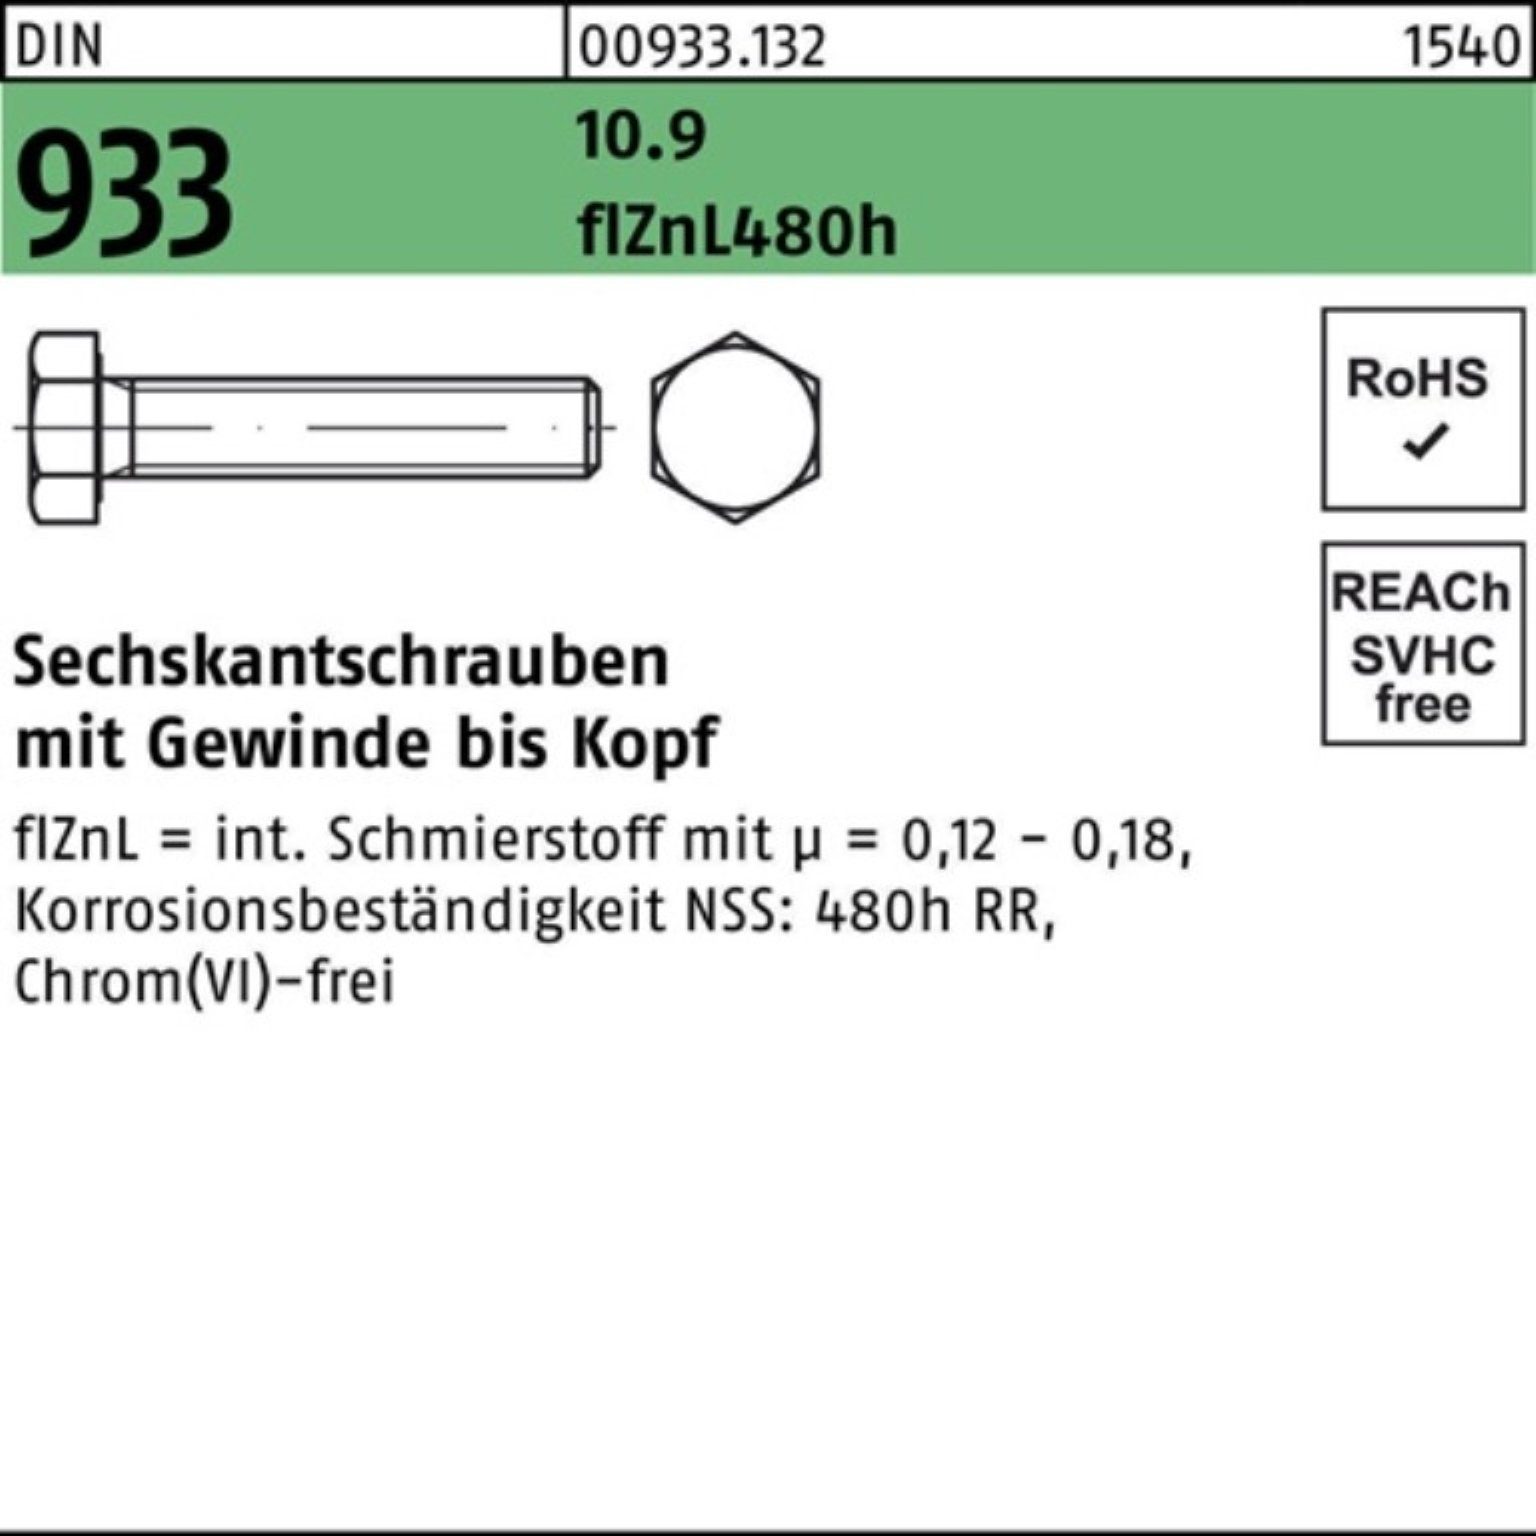 Reyher Sechskantschraube 500er Pack Sechskantschraube DIN 933 VG M6x 25 10.9 flZnL/nc/x/x/480h